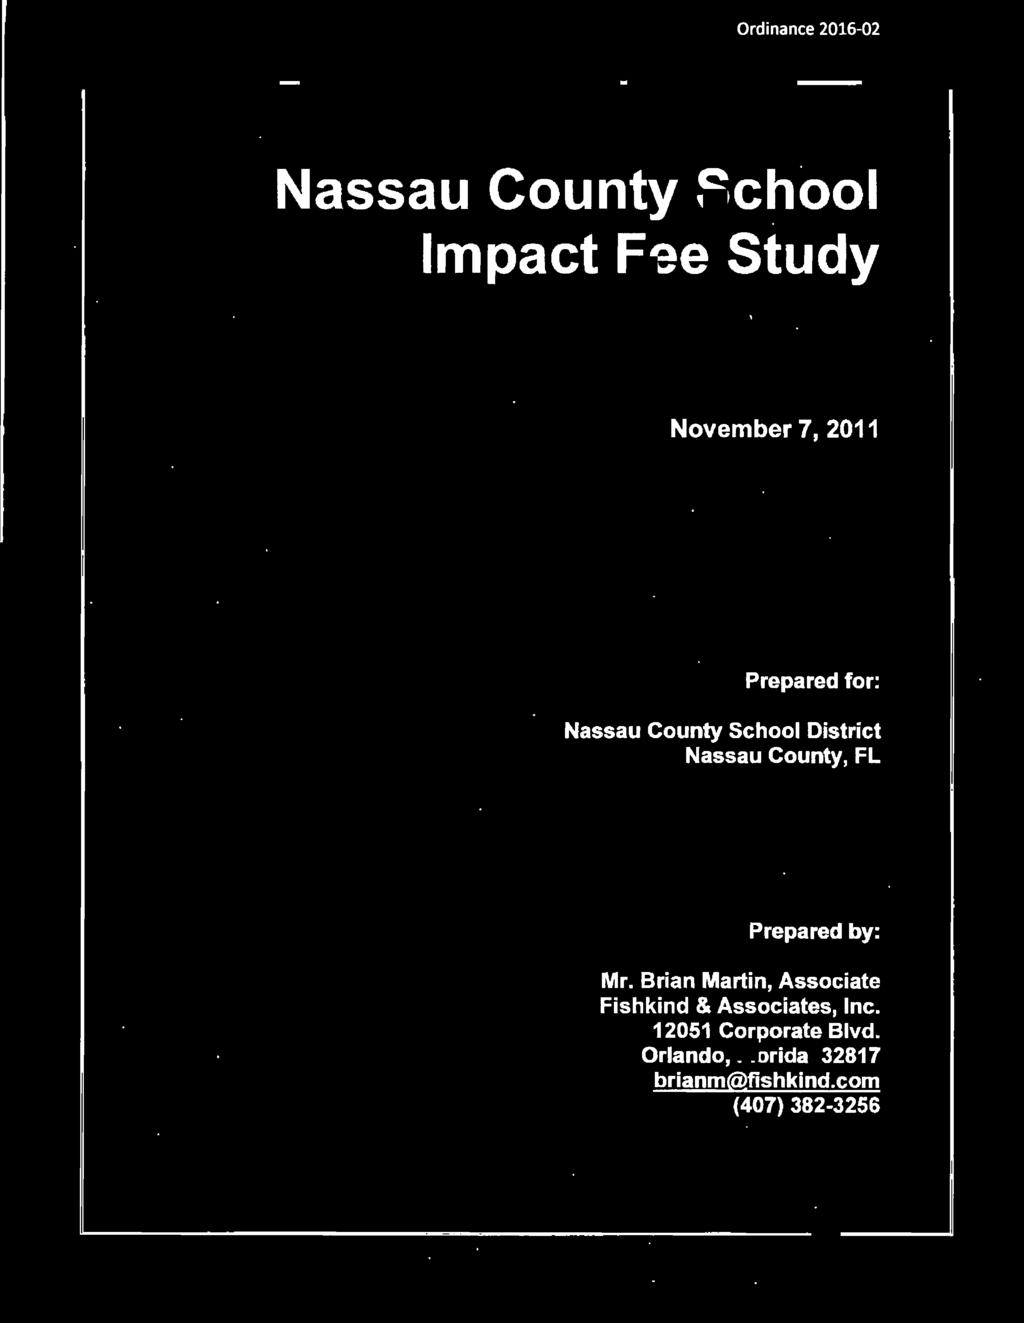 Prepared for: Nassau County School District